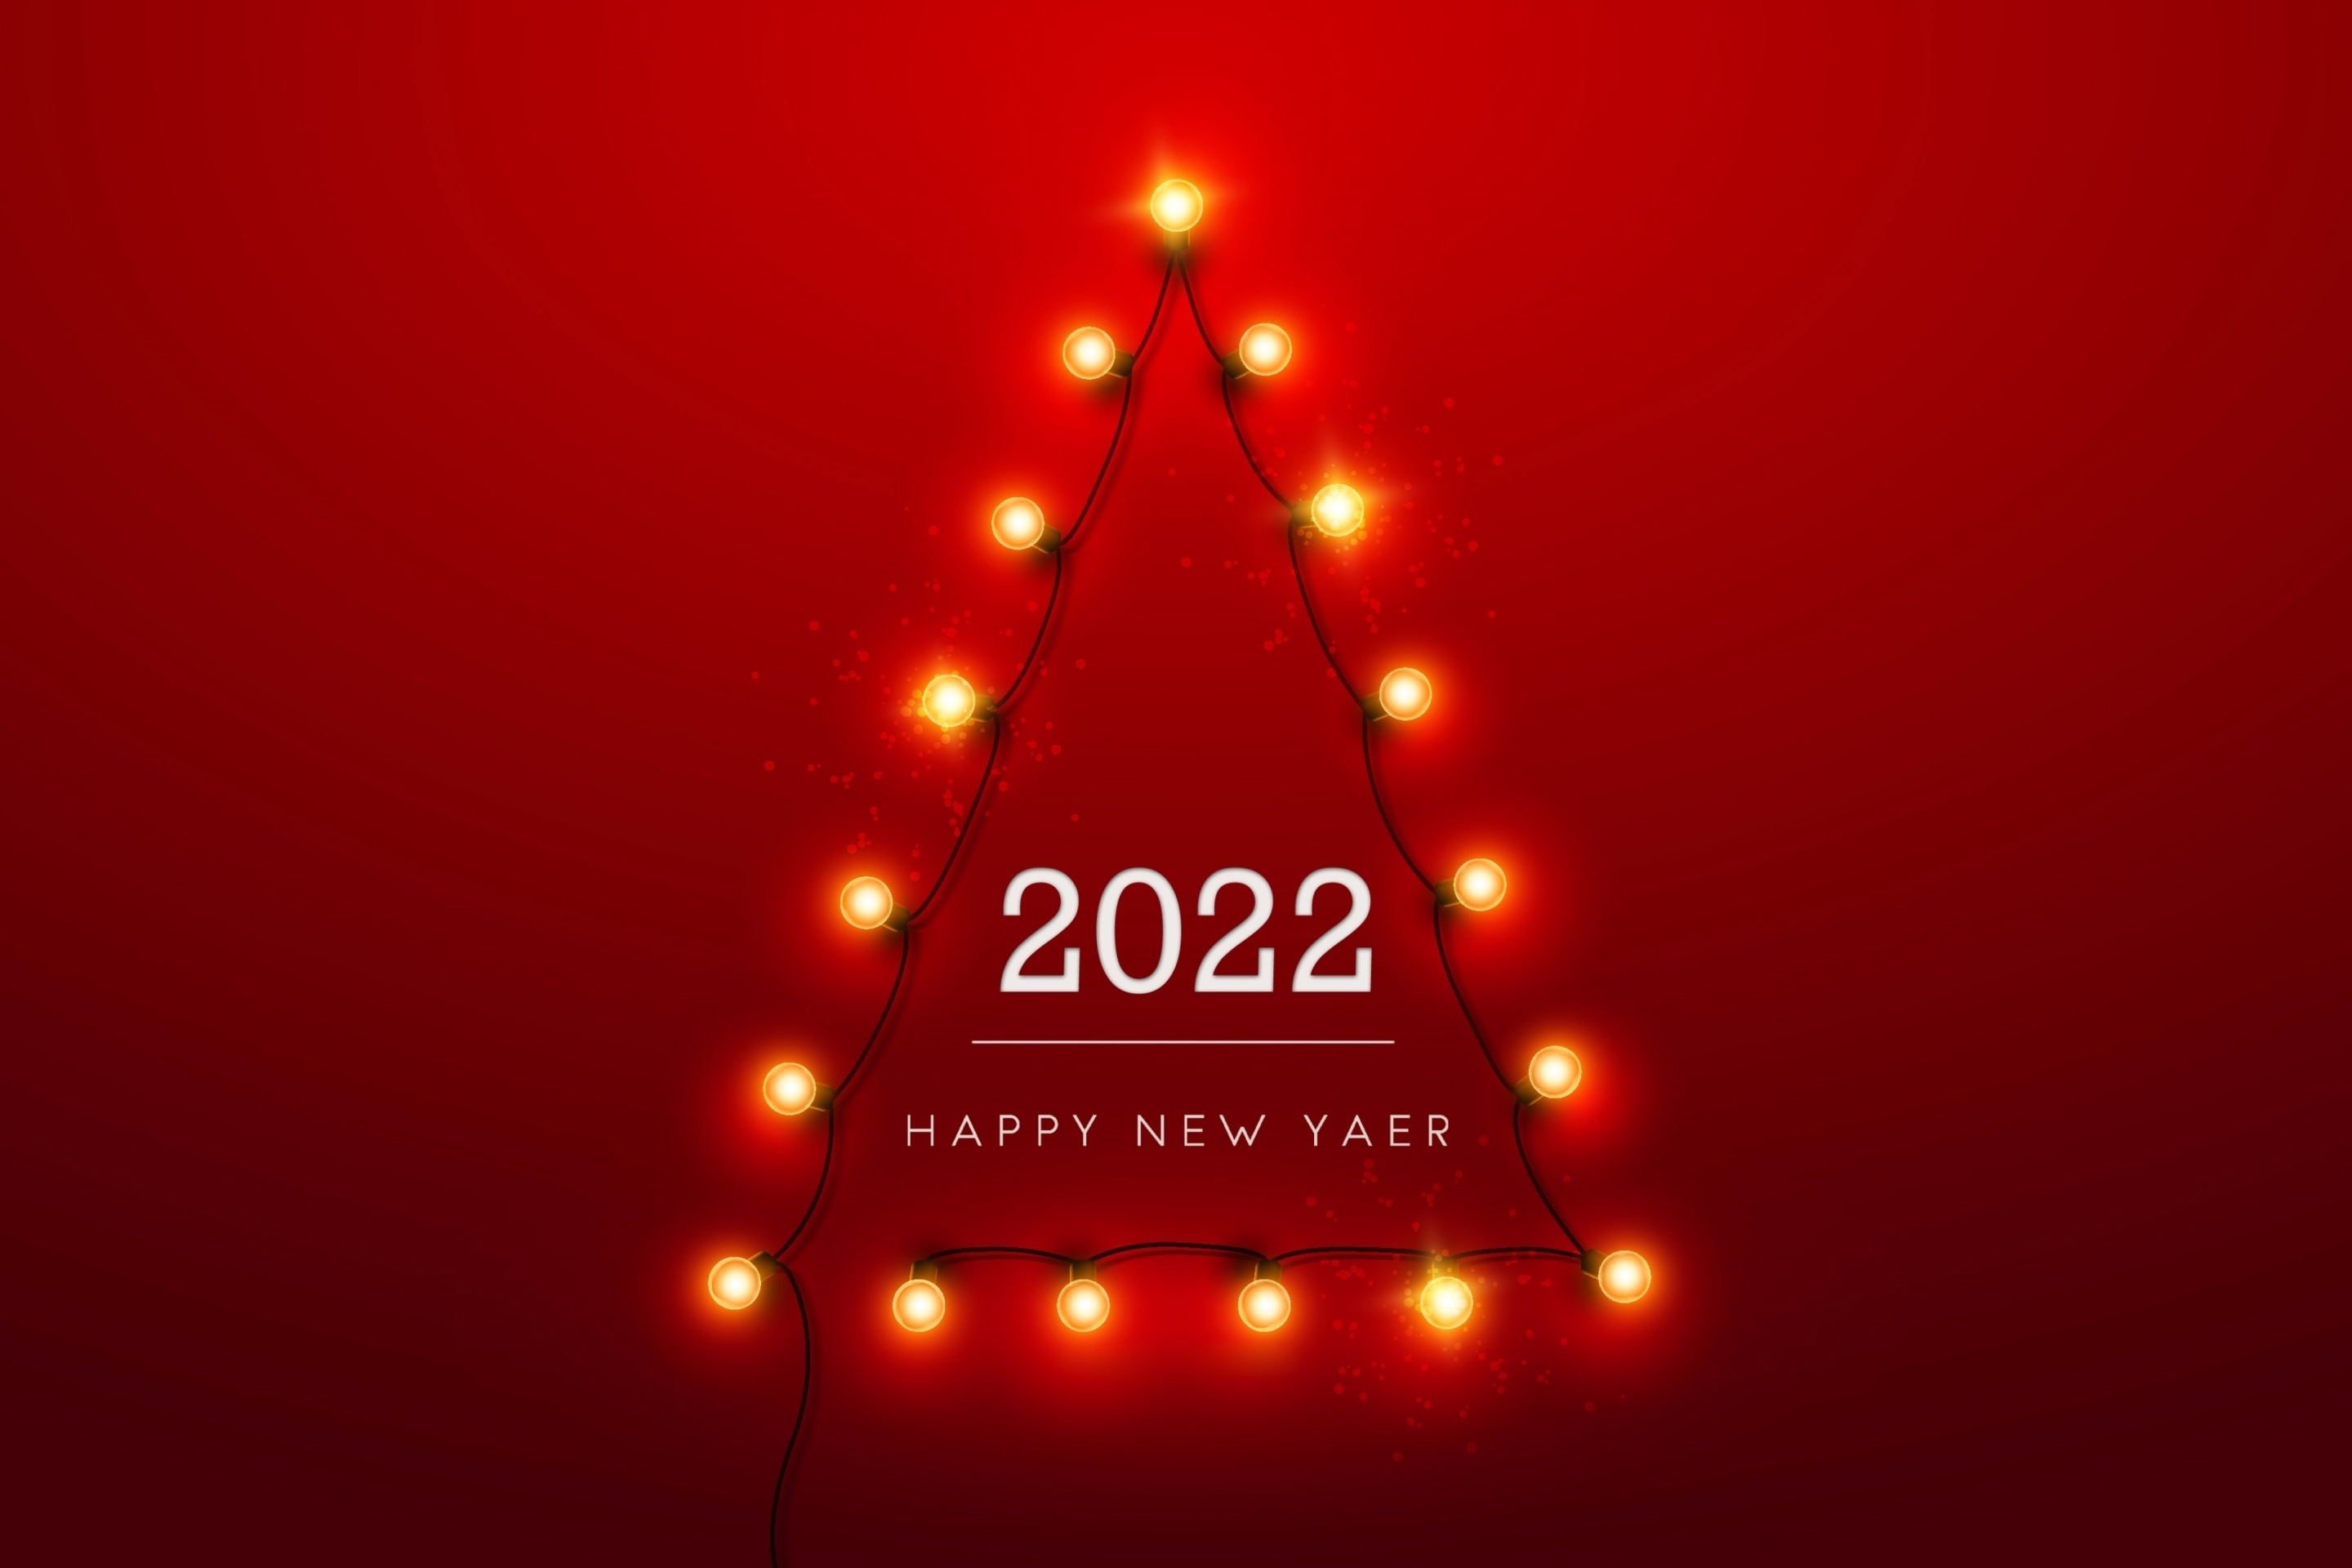 Happy New Year 2022 wallpaper 2880x1920